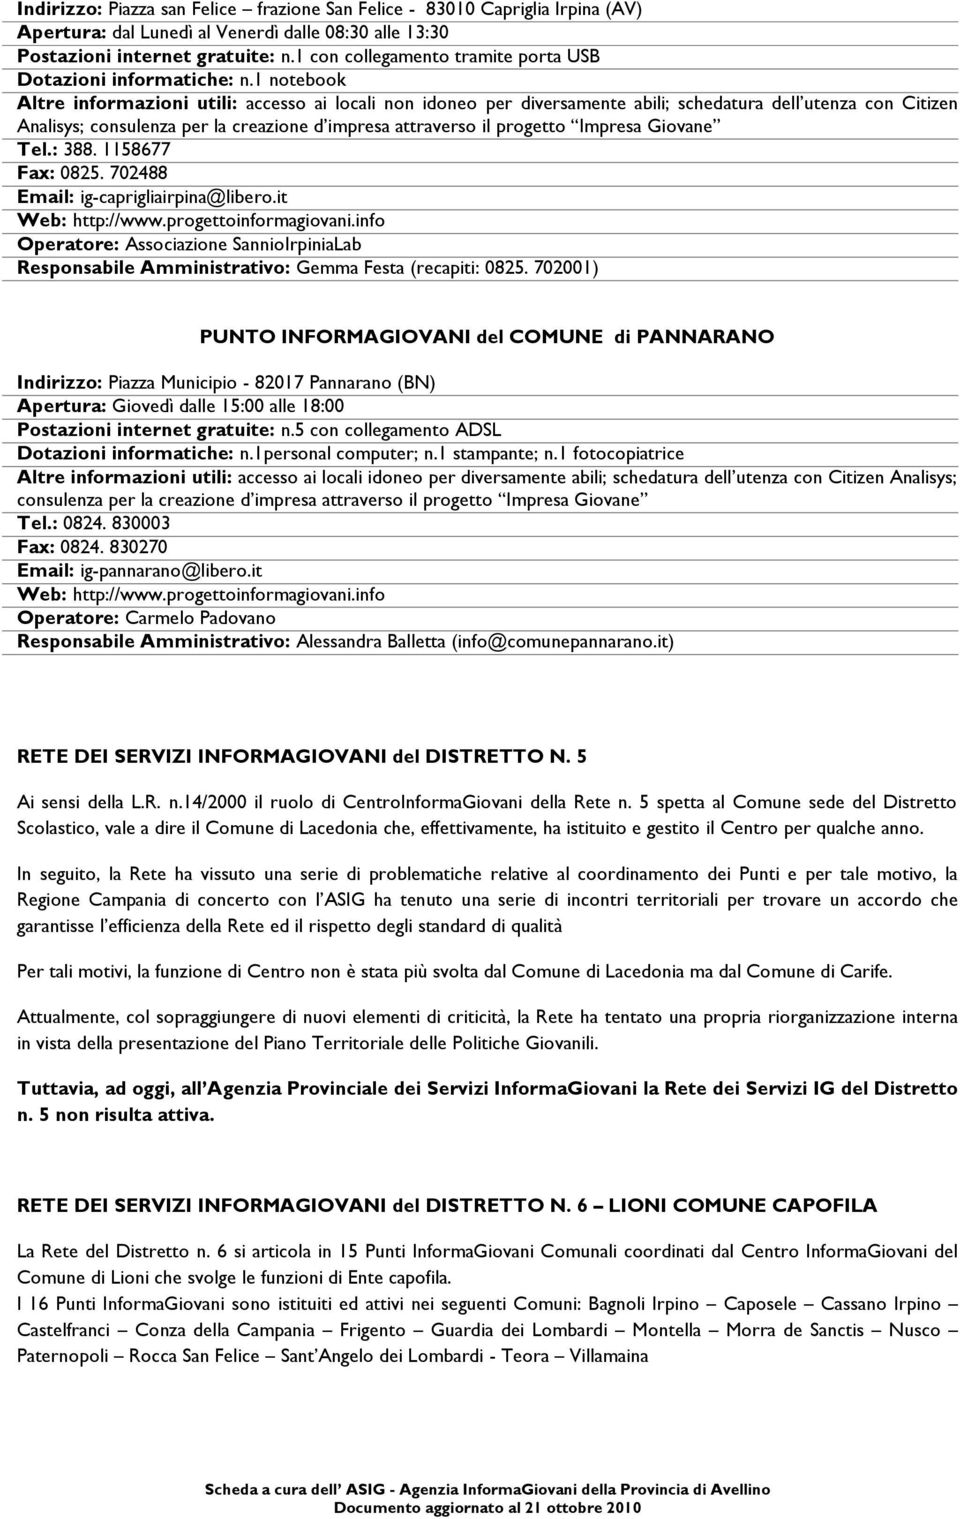 702488 Email: ig-caprigliairpina@libero.it Web: http://www.progettoinformagiovani.info Operatore: Associazione SannioIrpiniaLab Responsabile Amministrativo: Gemma Festa (recapiti: 0825.